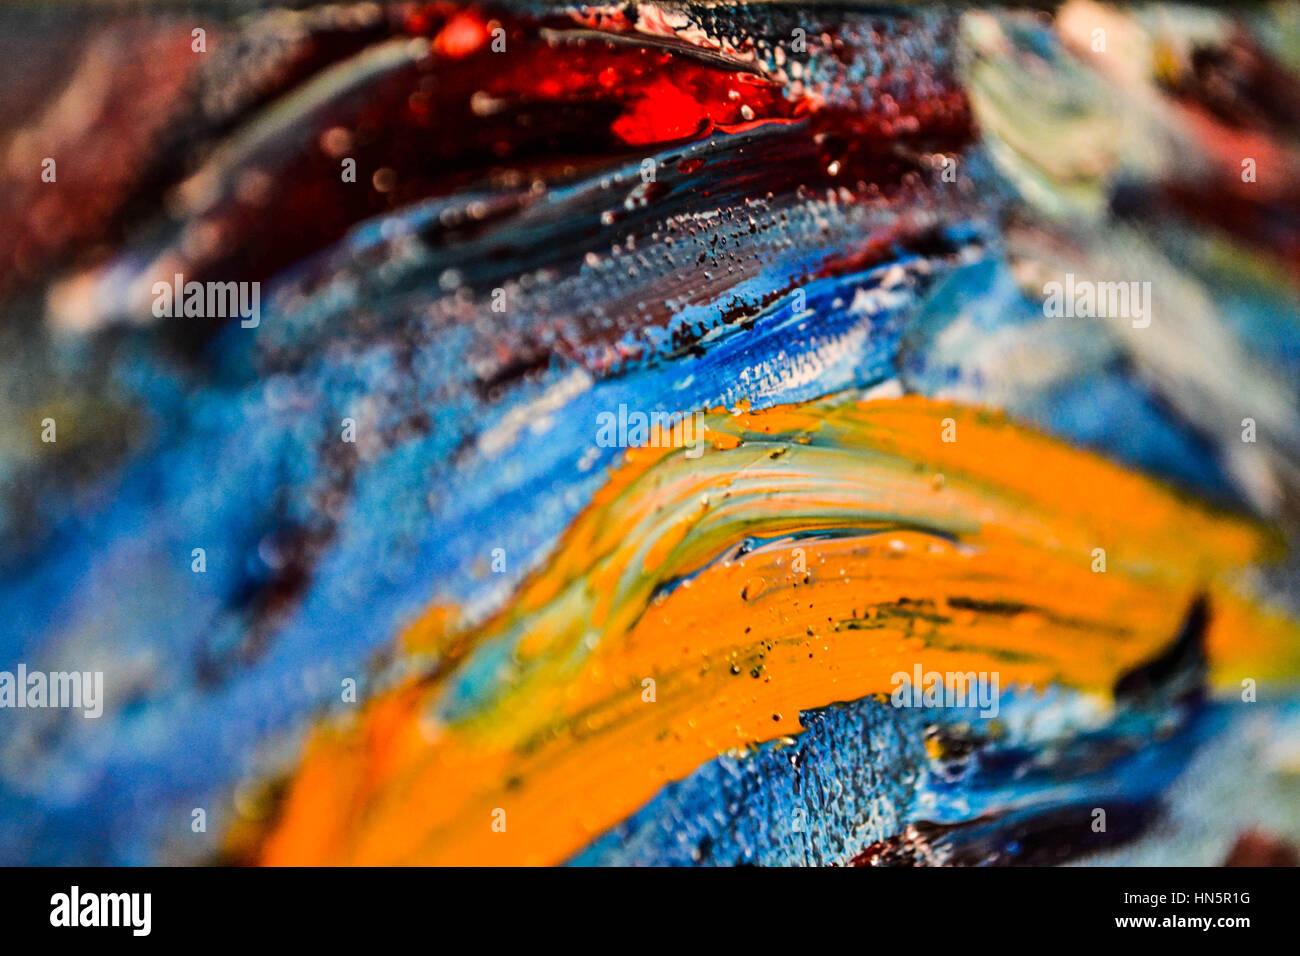 Pintura espesa fotografías e imágenes de alta resolución - Alamy